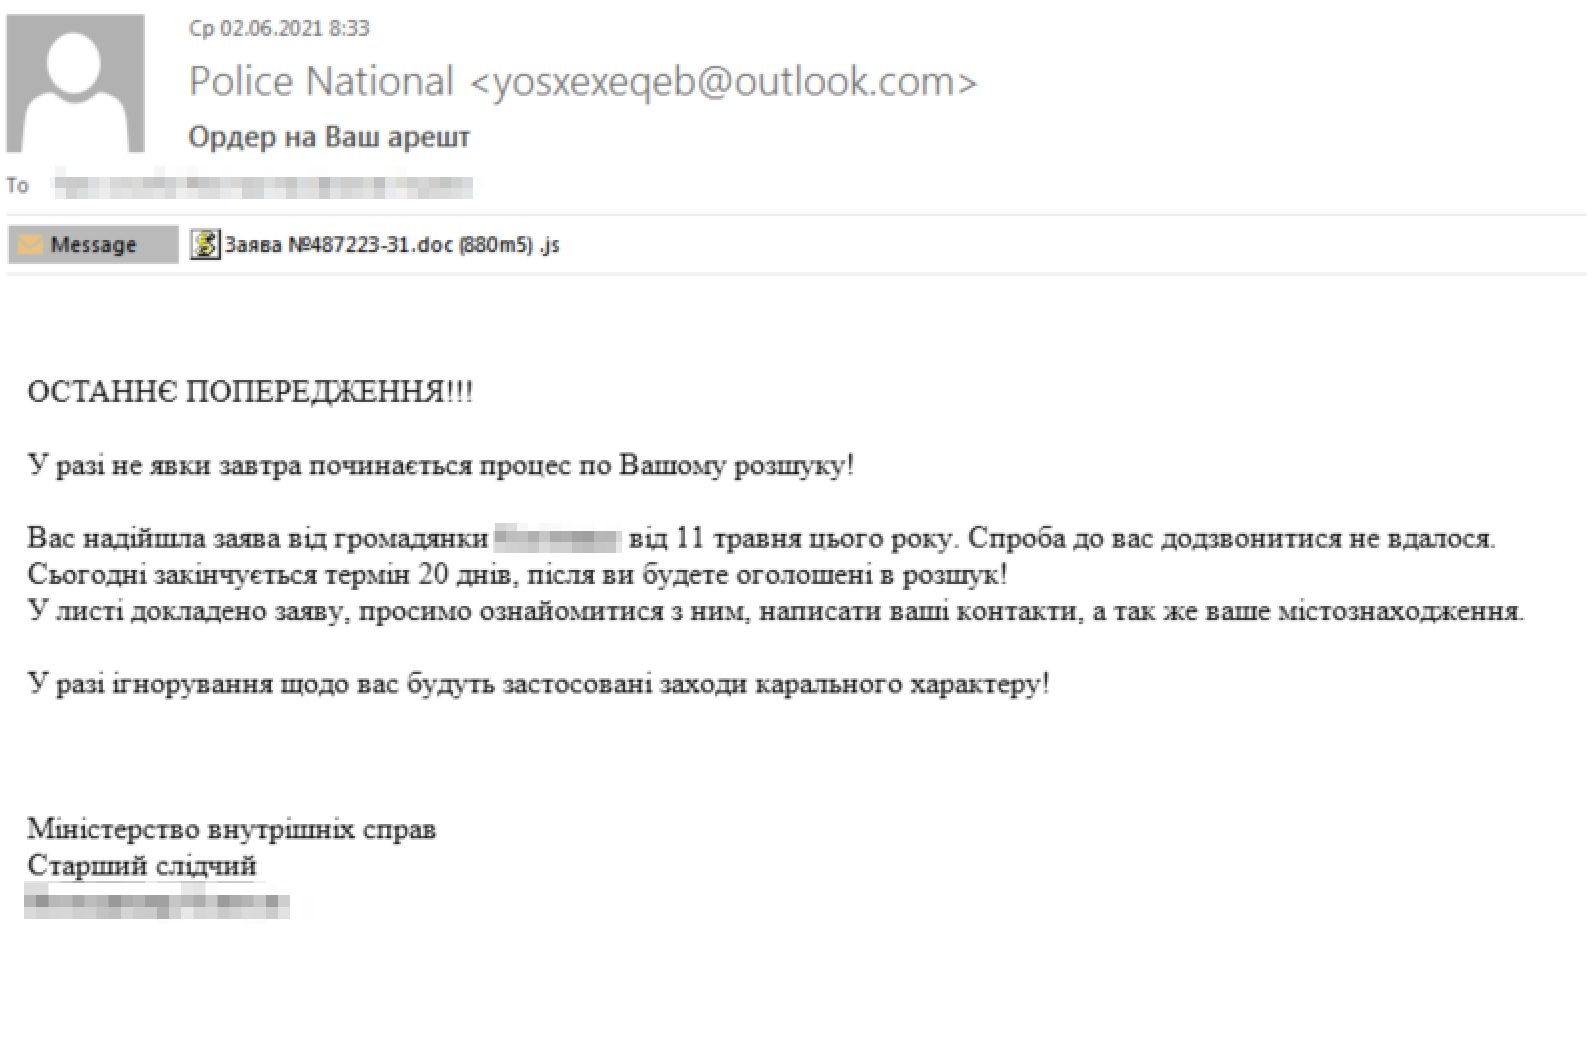 Spear phishing email sent to Ukrainian government organization in June 2021.